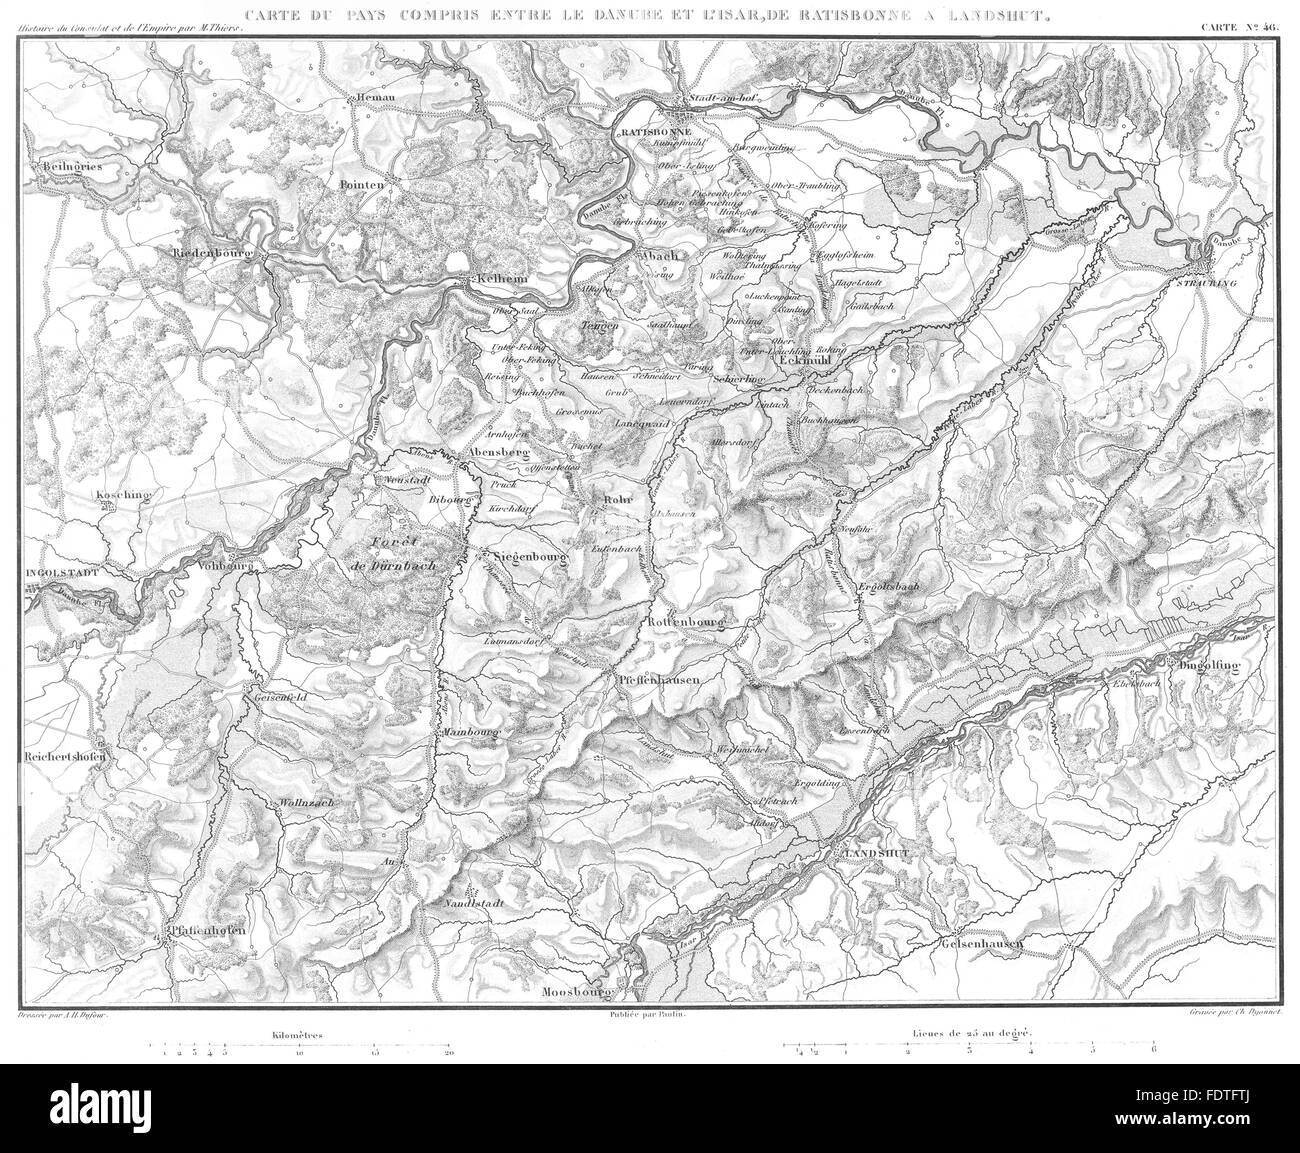 Germania: Danube-Isar; Regensburg Ratisbonne - Landshut, 1859 Mappa antichi Foto Stock